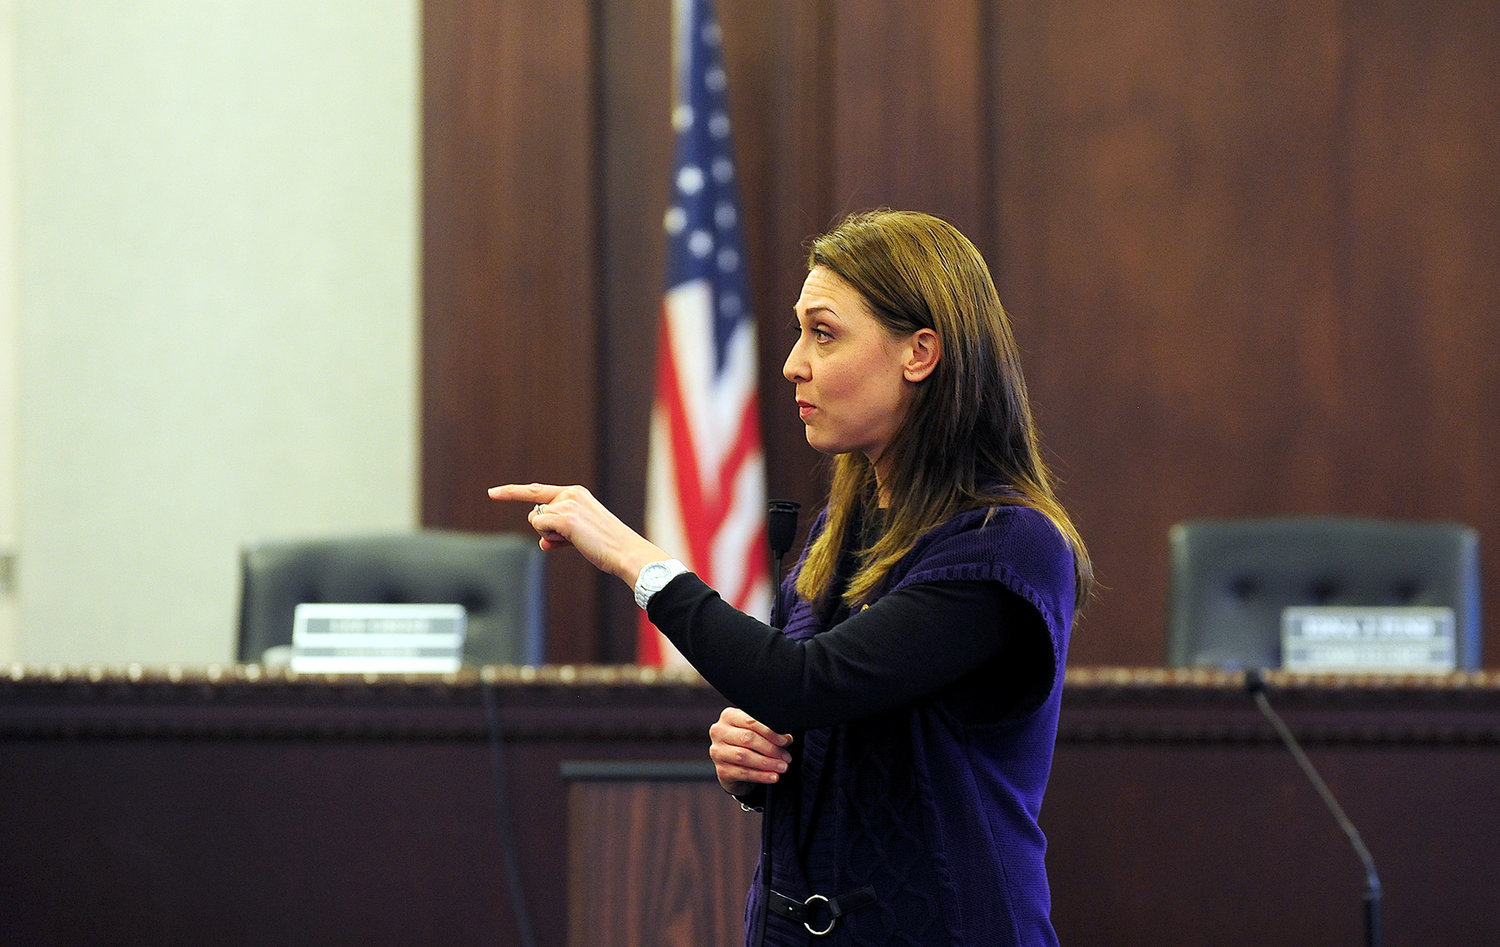 FILE PHOTO — U.S. Congresswoman Jaime Herrera Beutler addresses Lewis County citizens in this file photo.